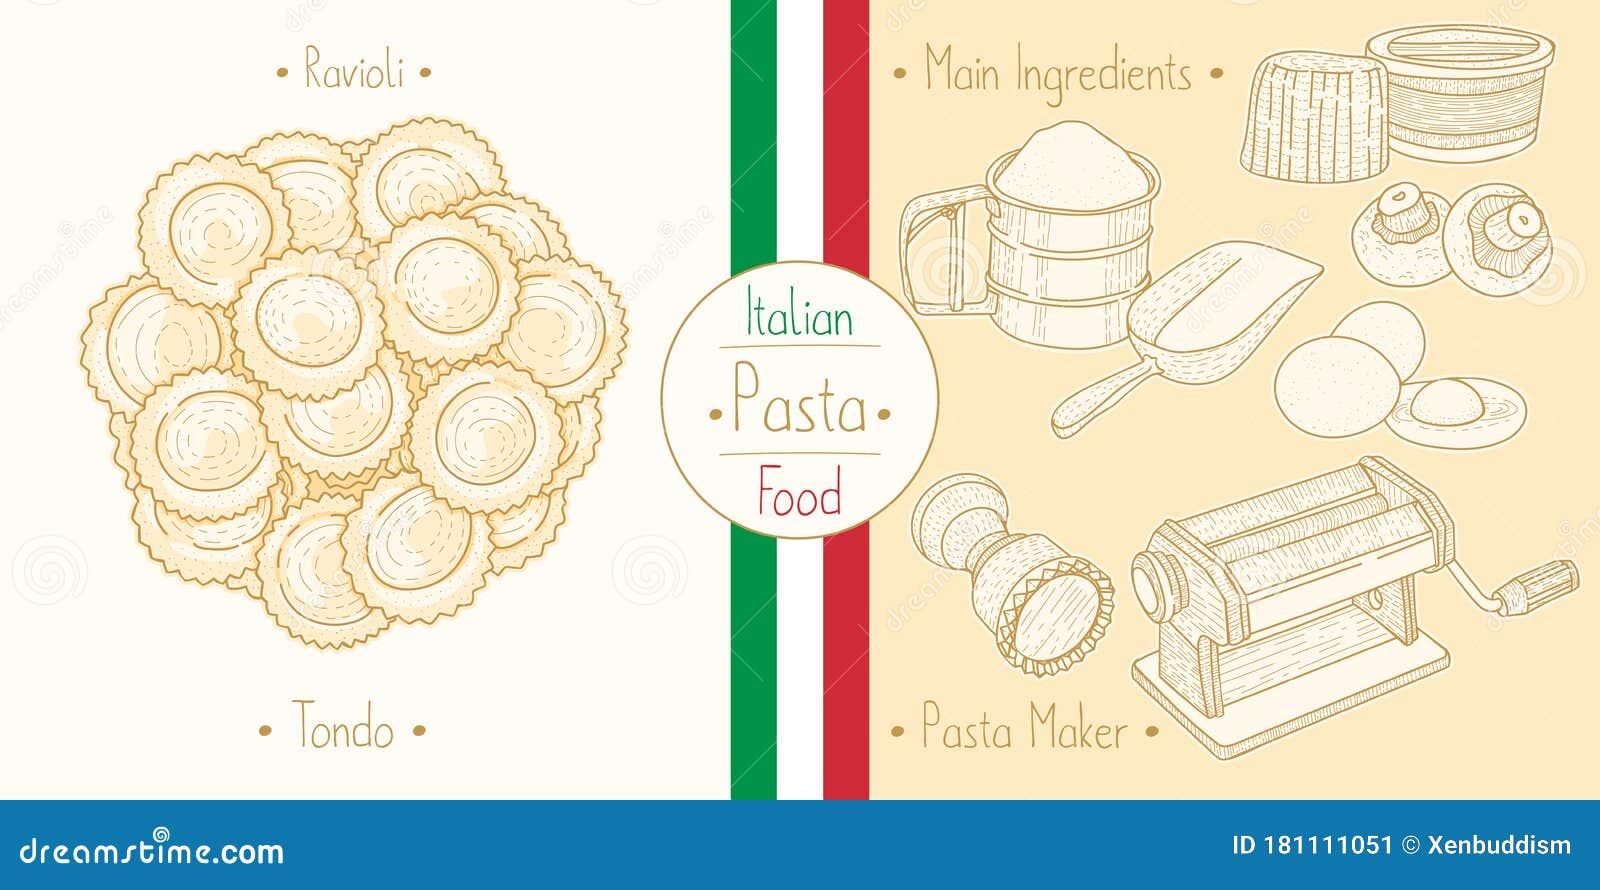 italian food pasta with filling ravioli tondo